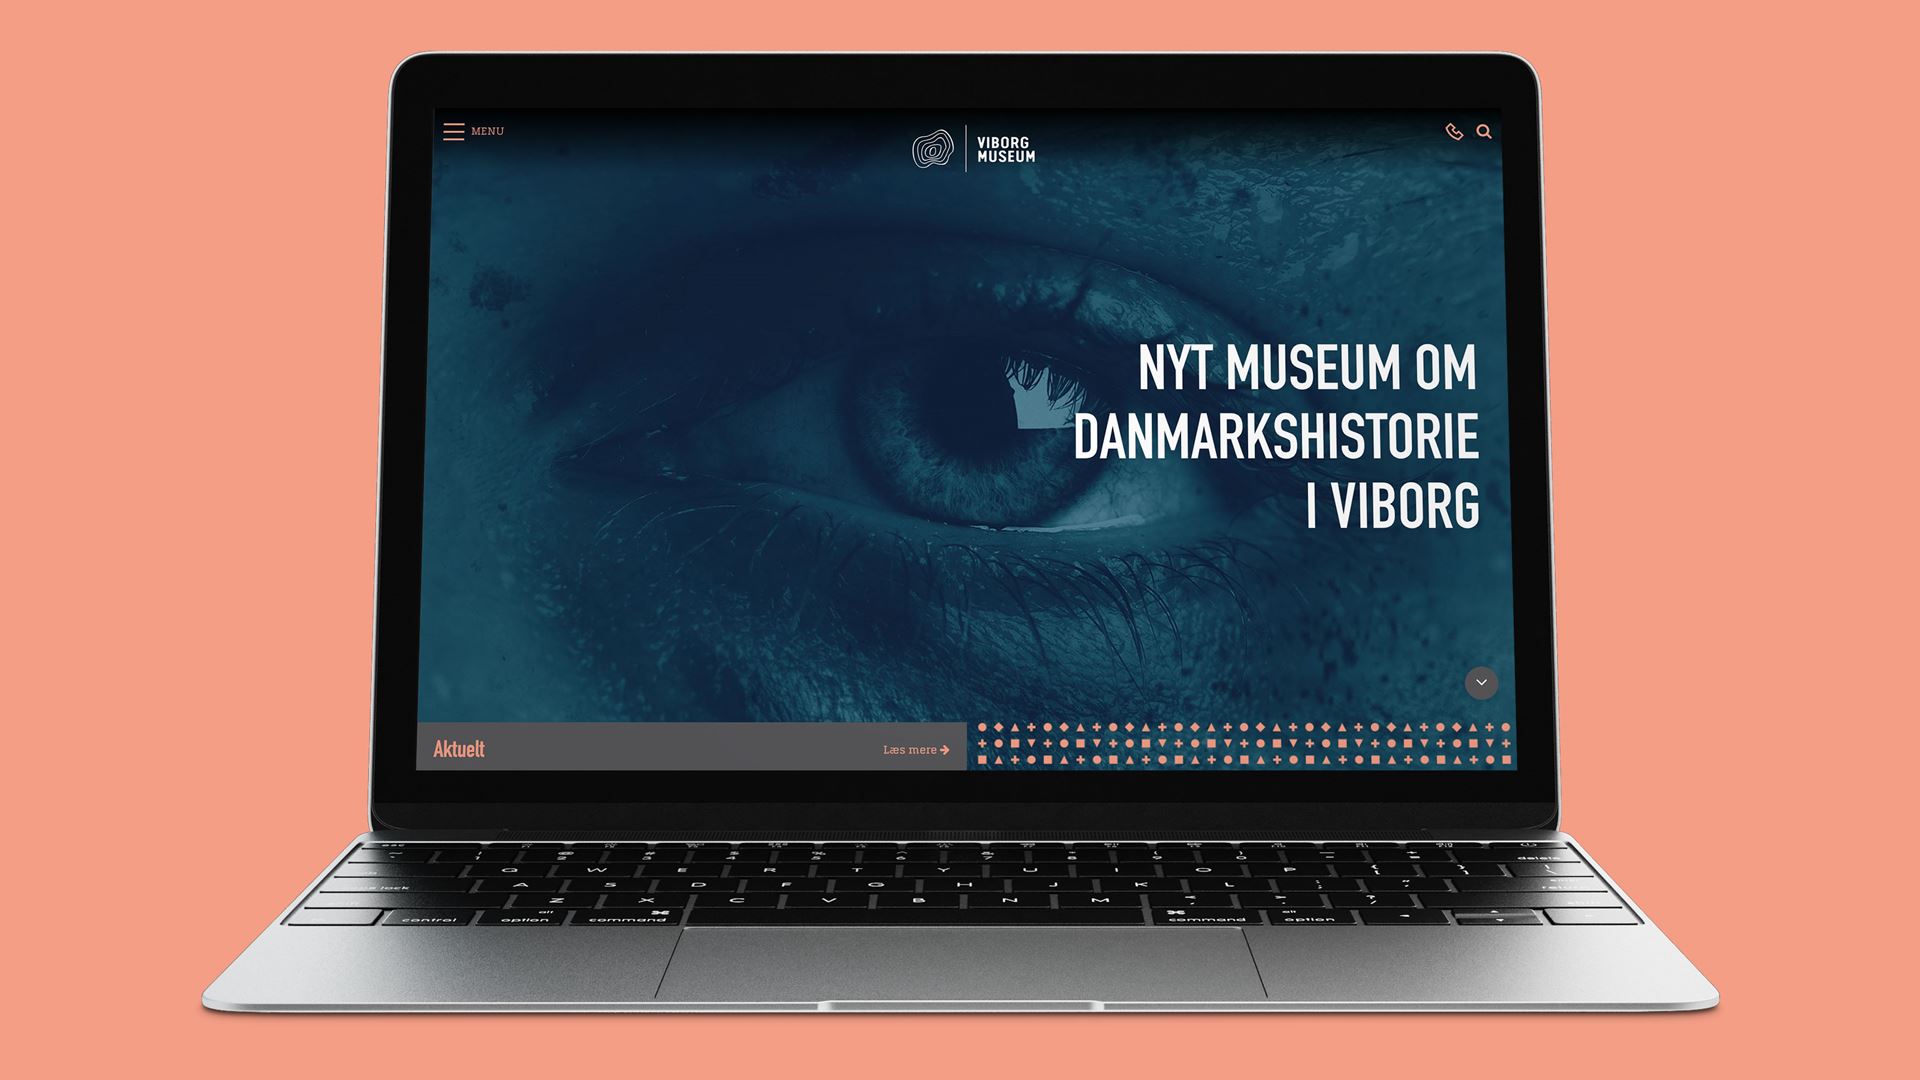 Viborg Museum website